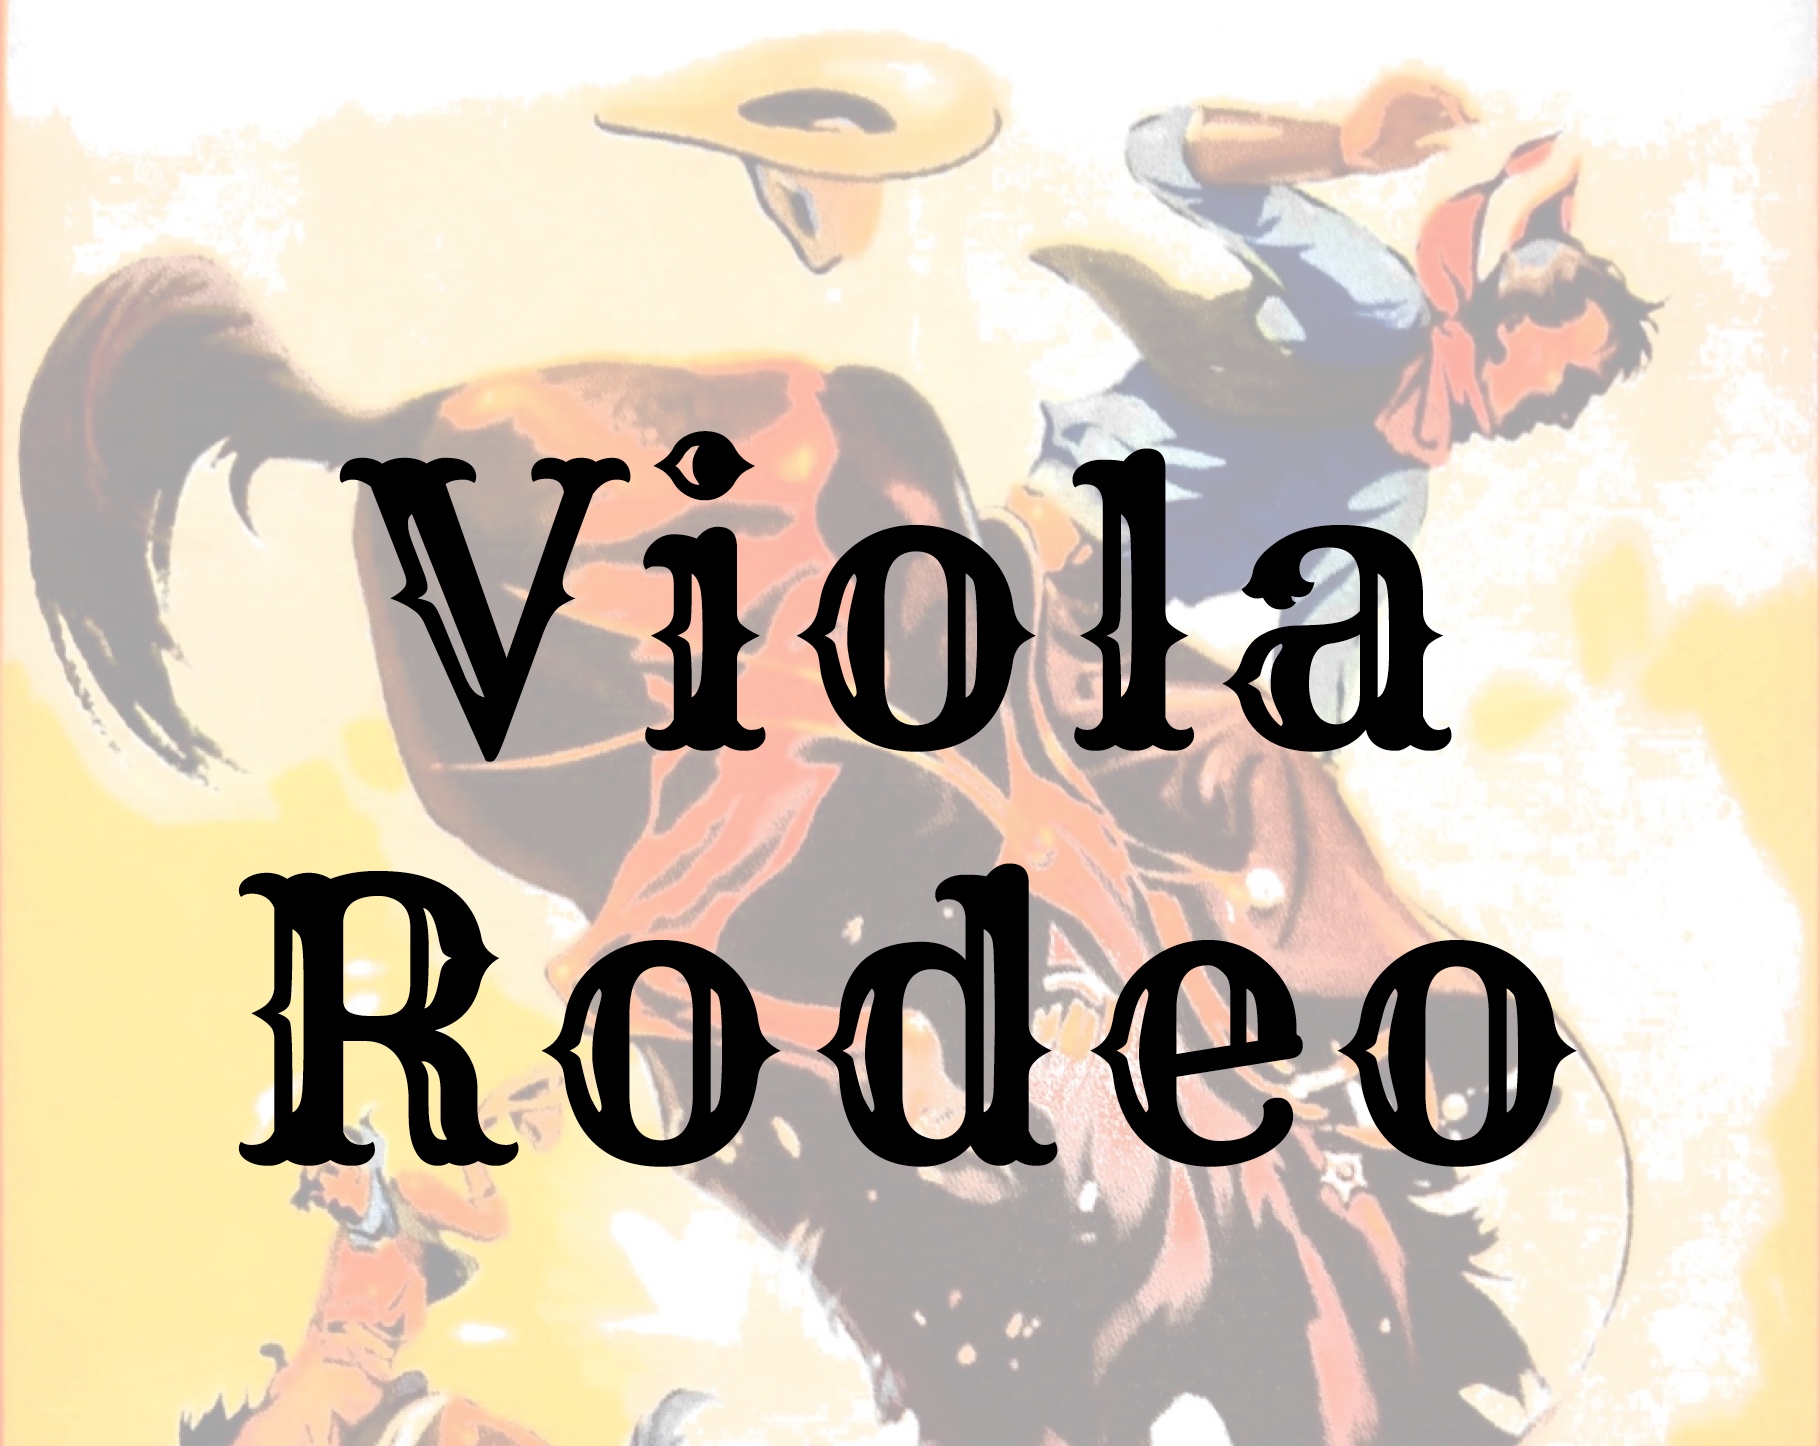 Viola Rodeo, Texas Tech University School of Music, 2018